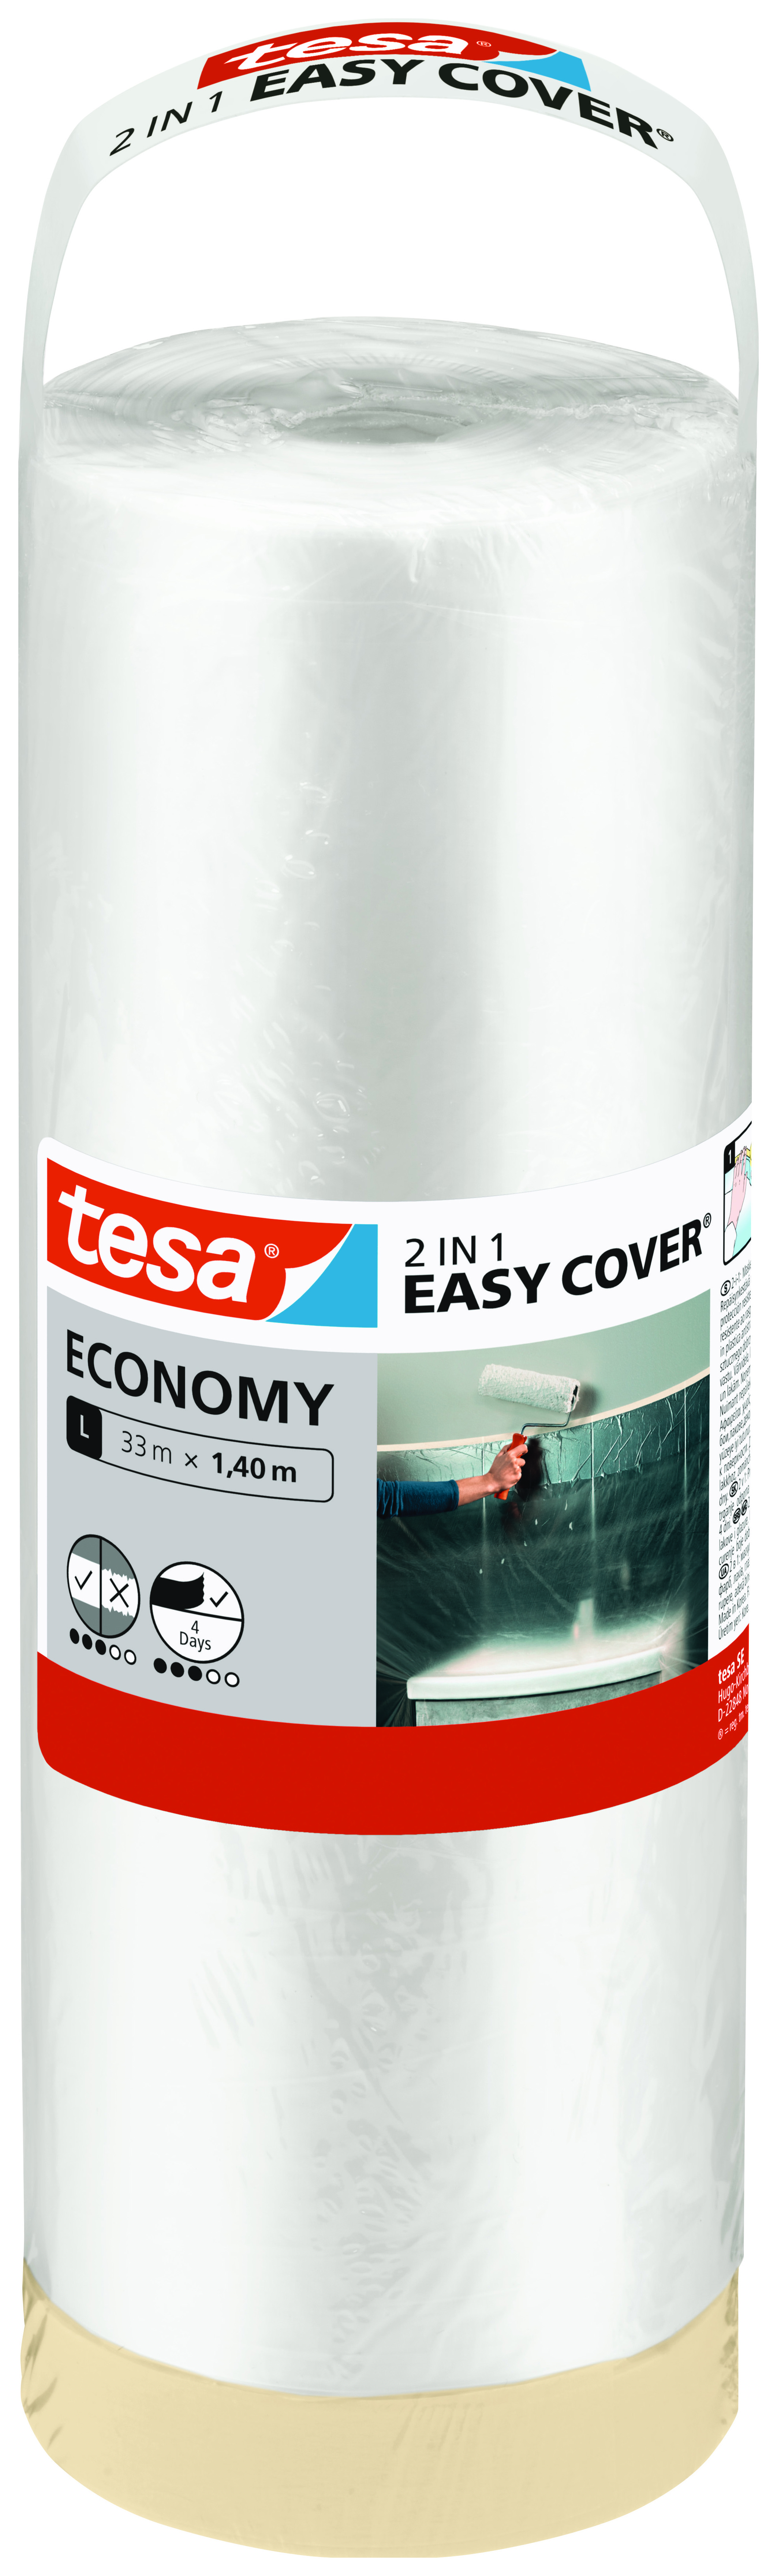 Tesa Easy Cover Economy L - 2 in 1 Masking Tape & Dust Sheet - 33m x 1.40m